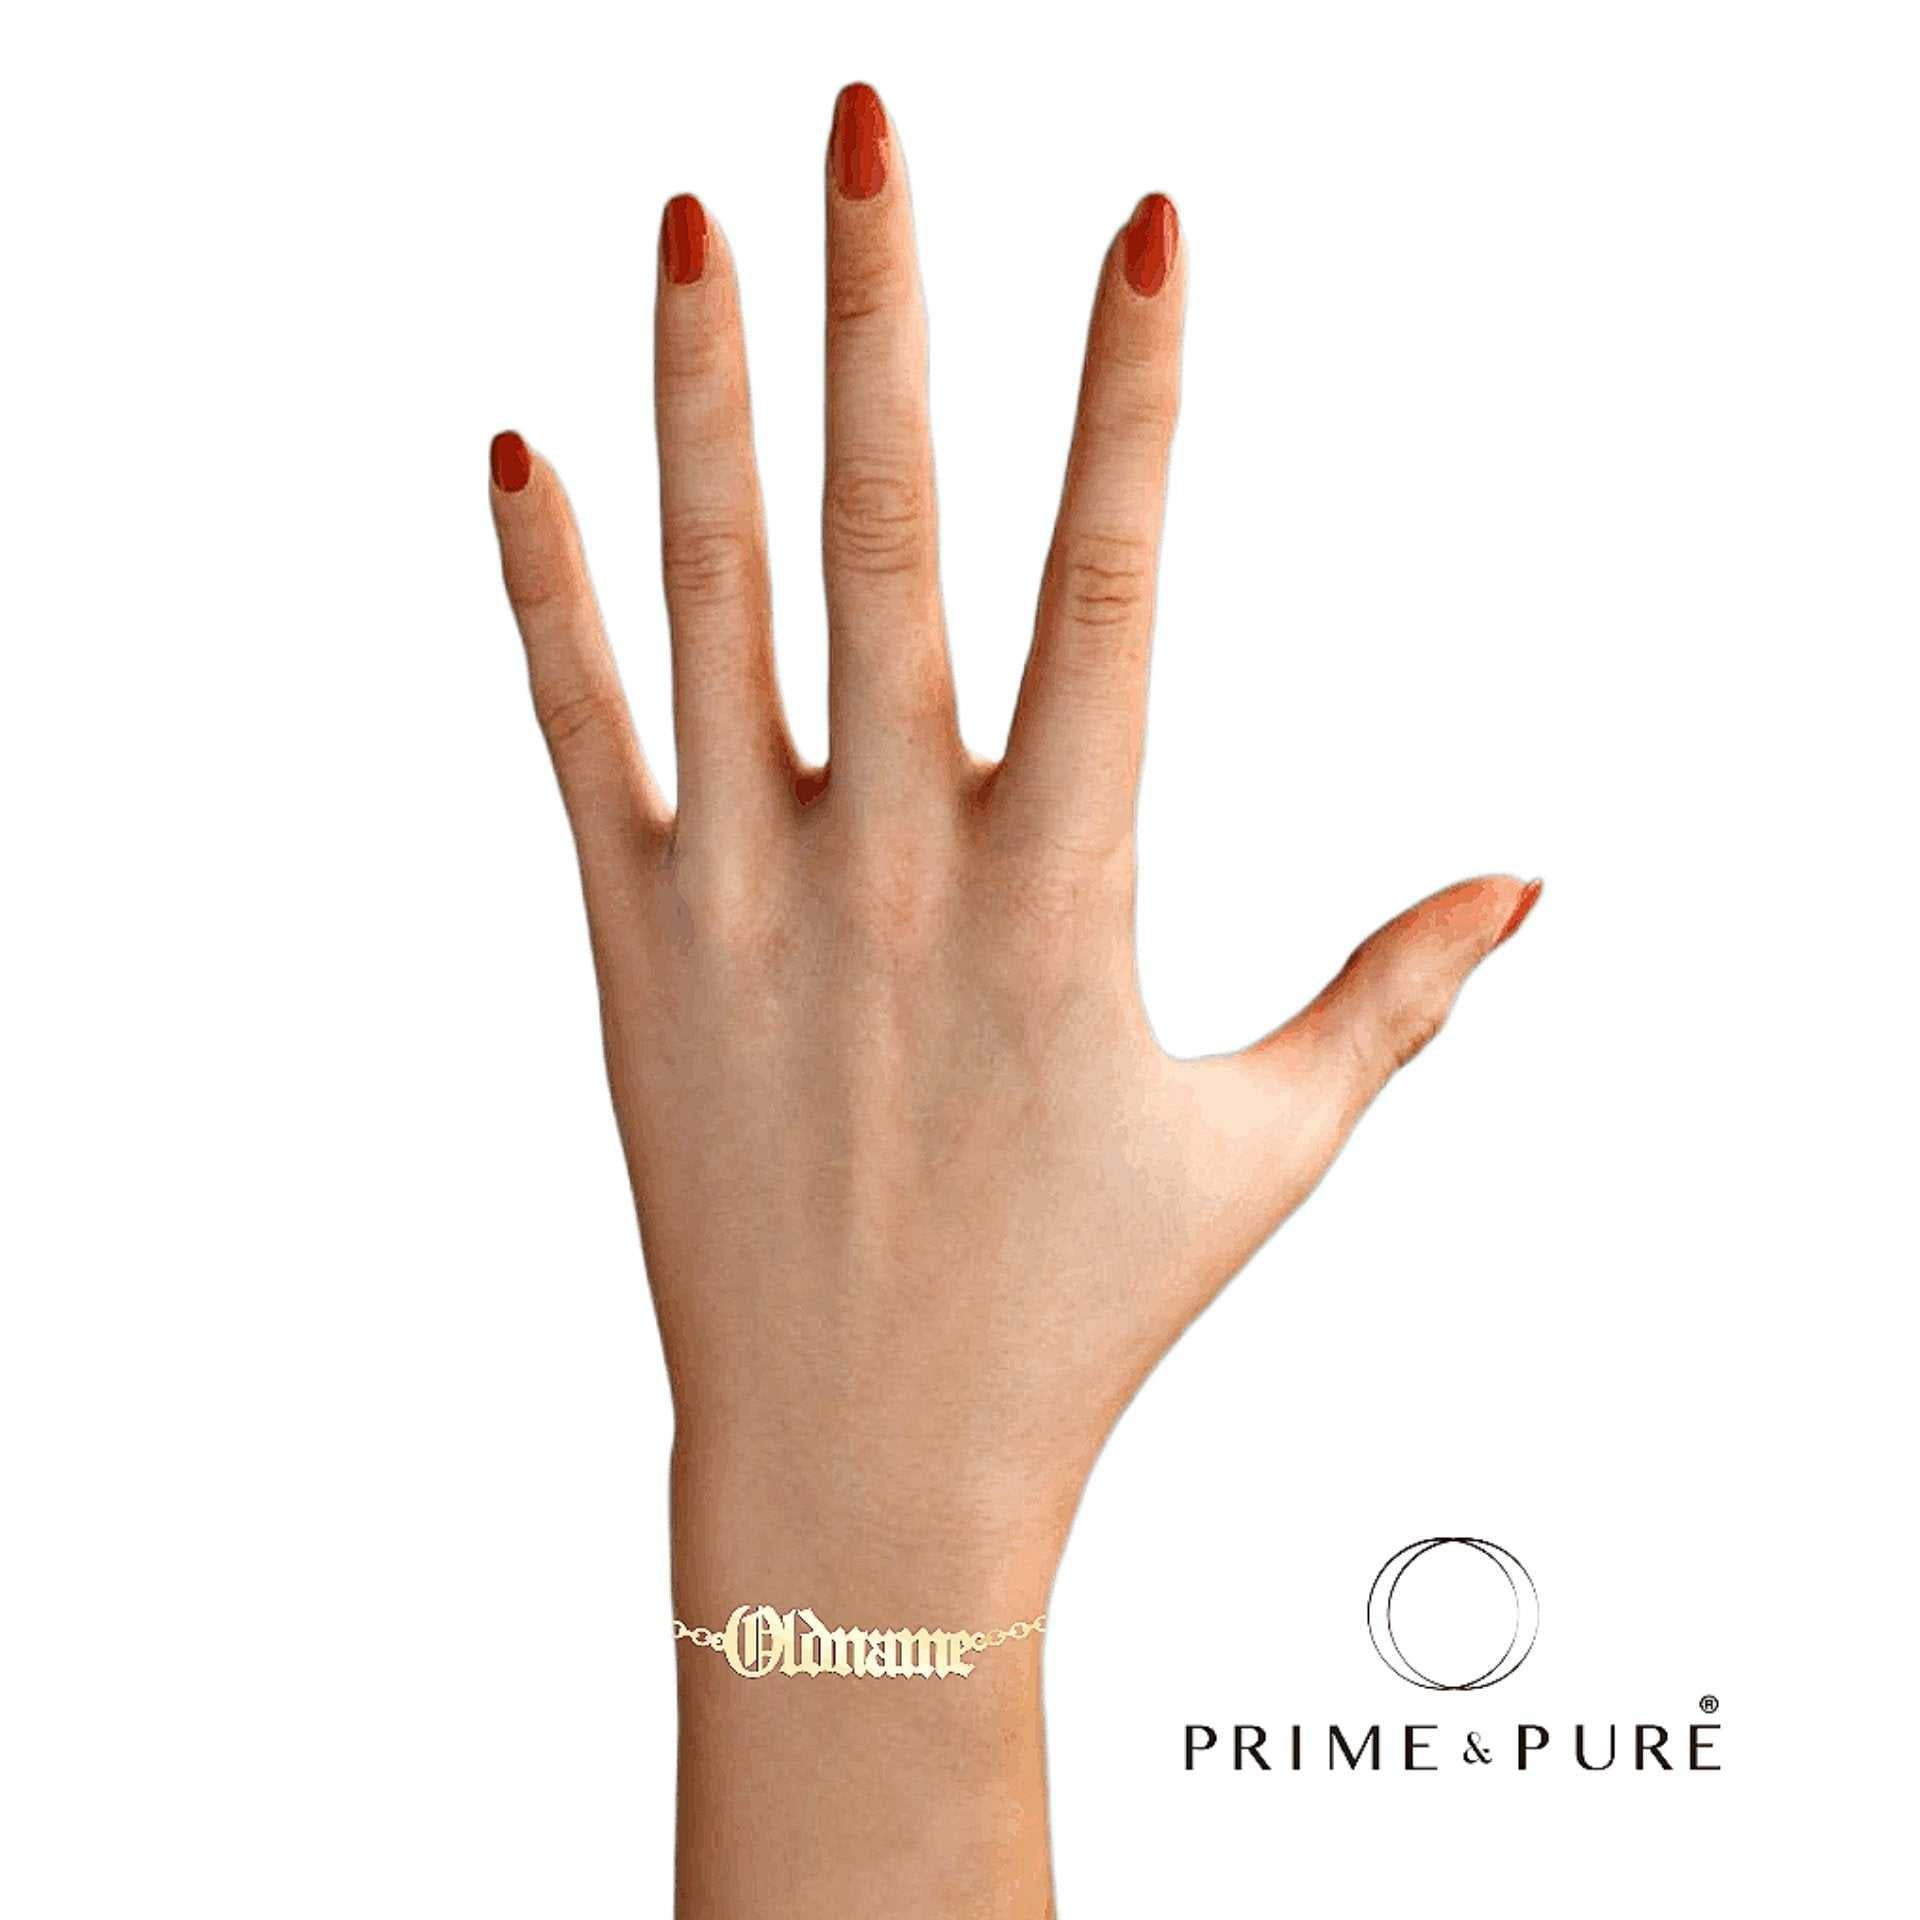 Towne Name Bracelet - Prime & Pure